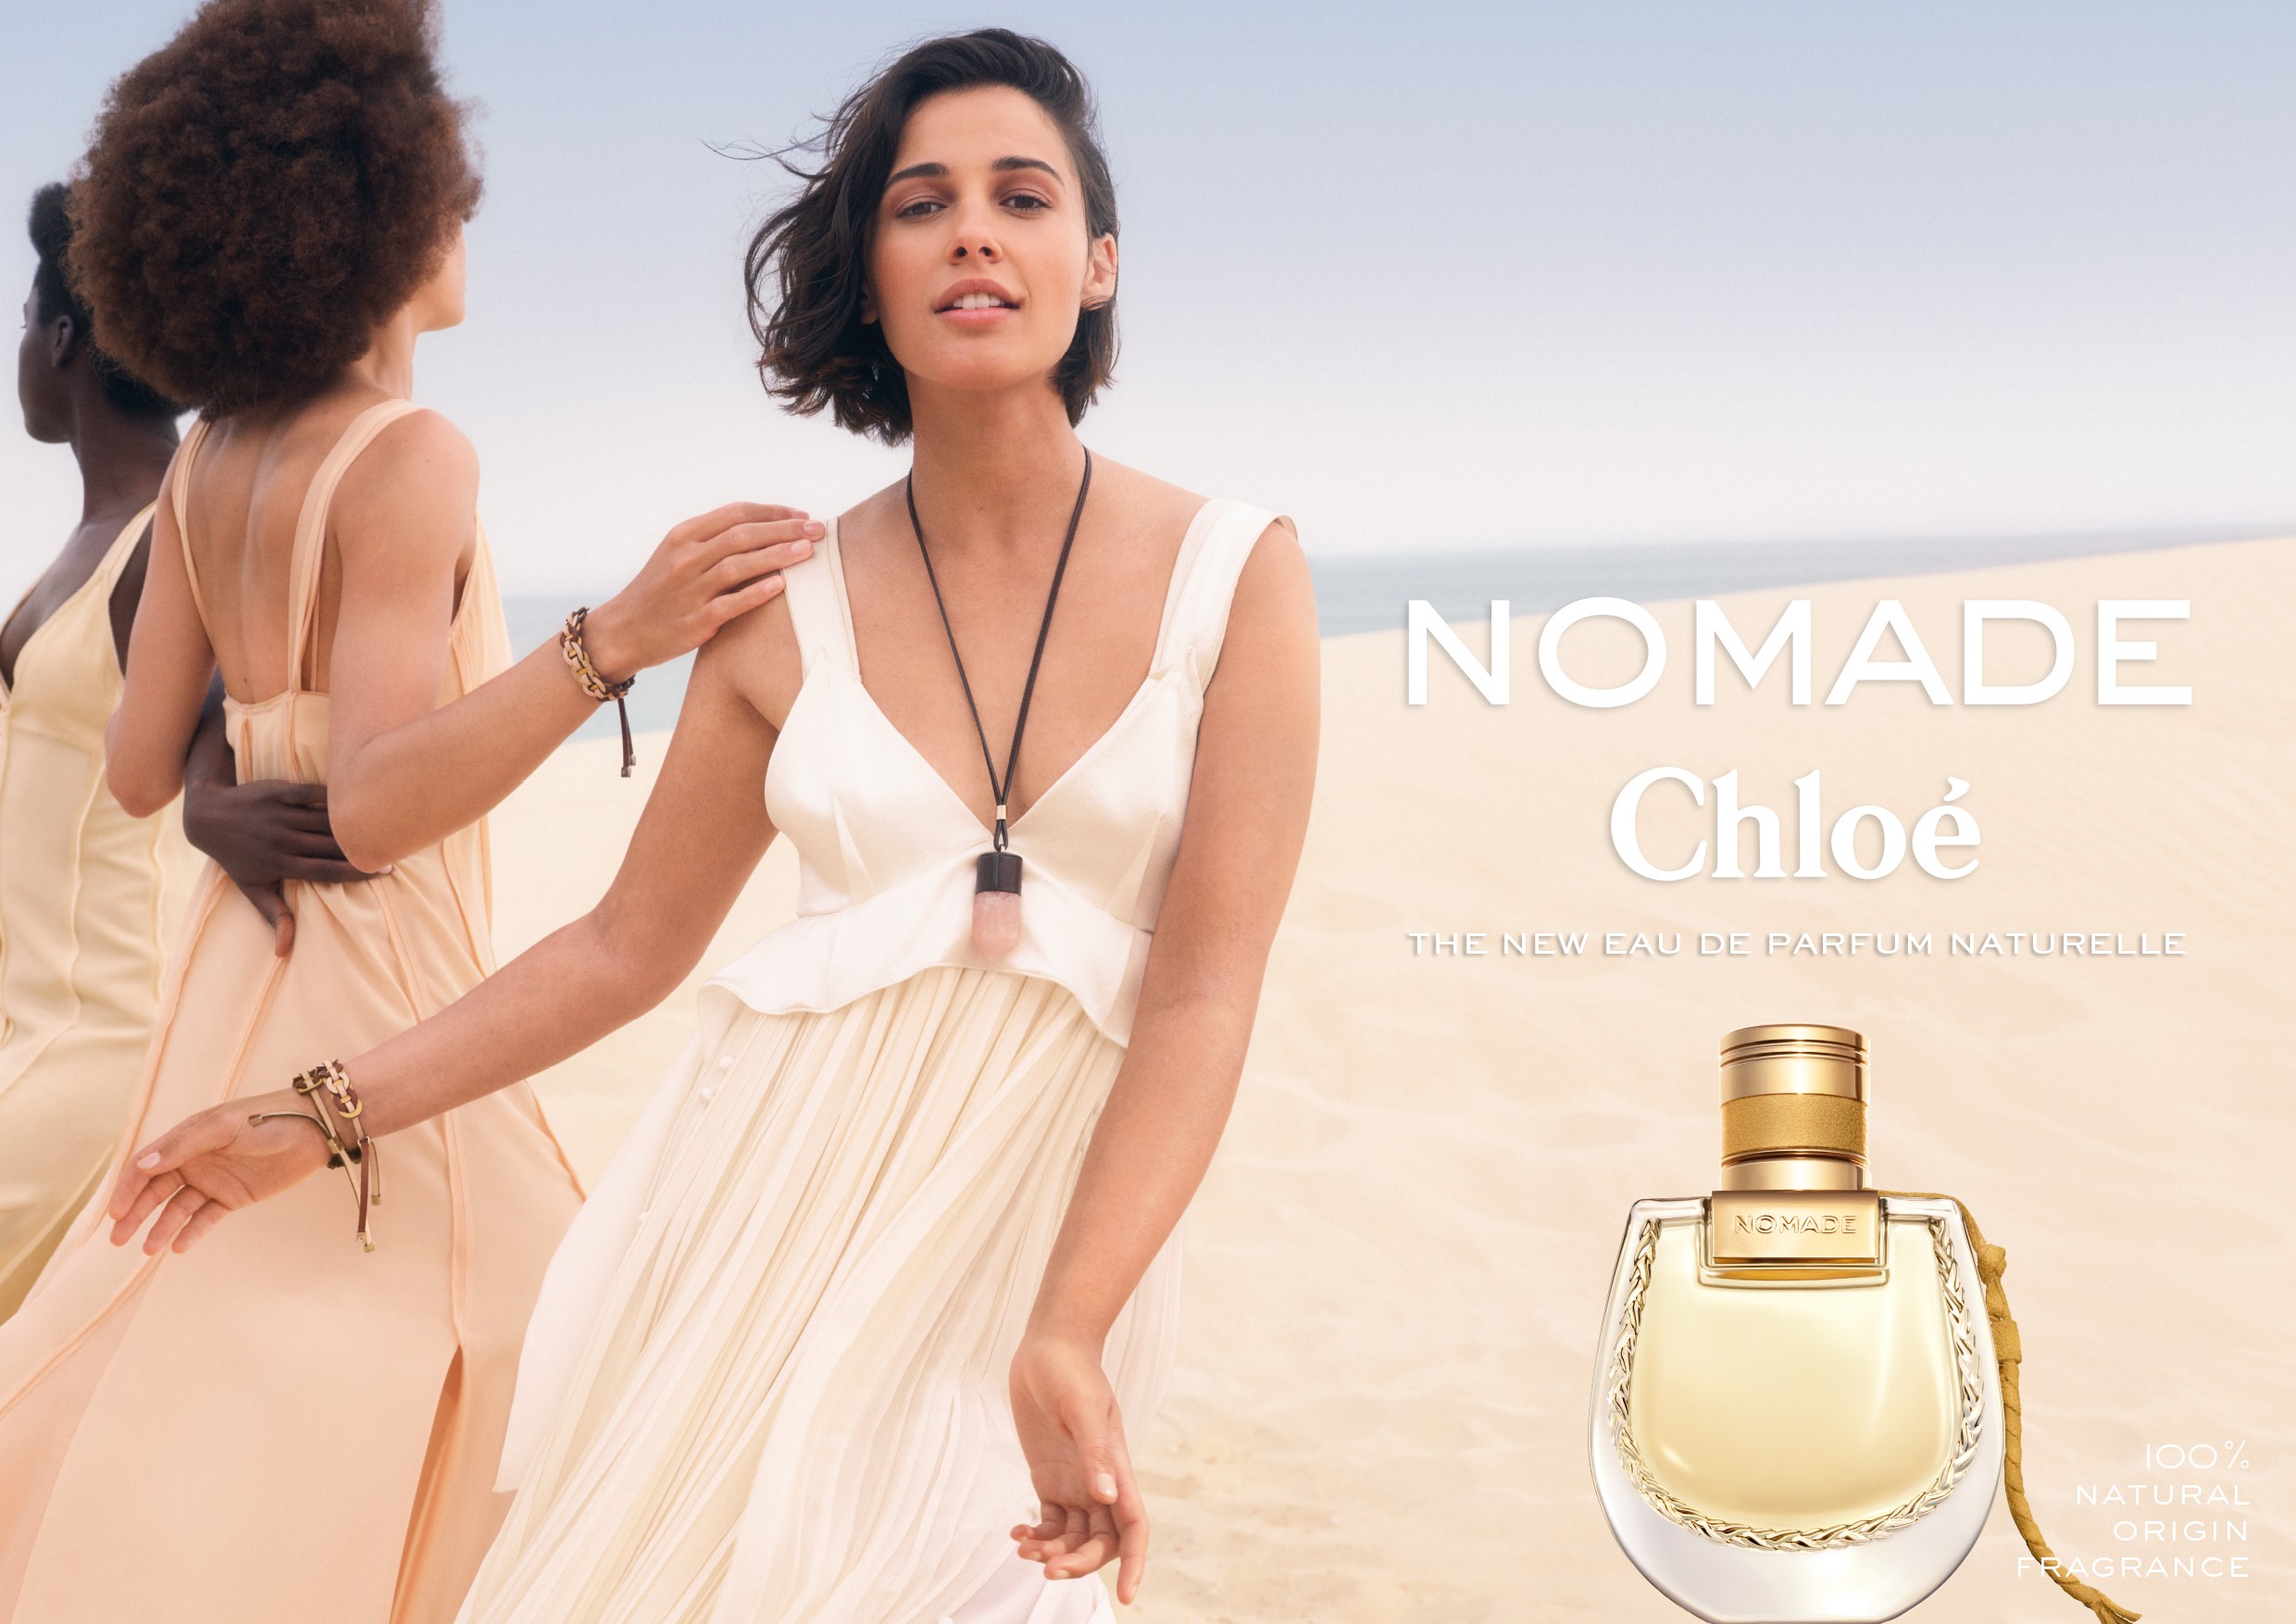 Chloe Nomade Eau De Parfum Naturelle Naomi Scott 10 11zon